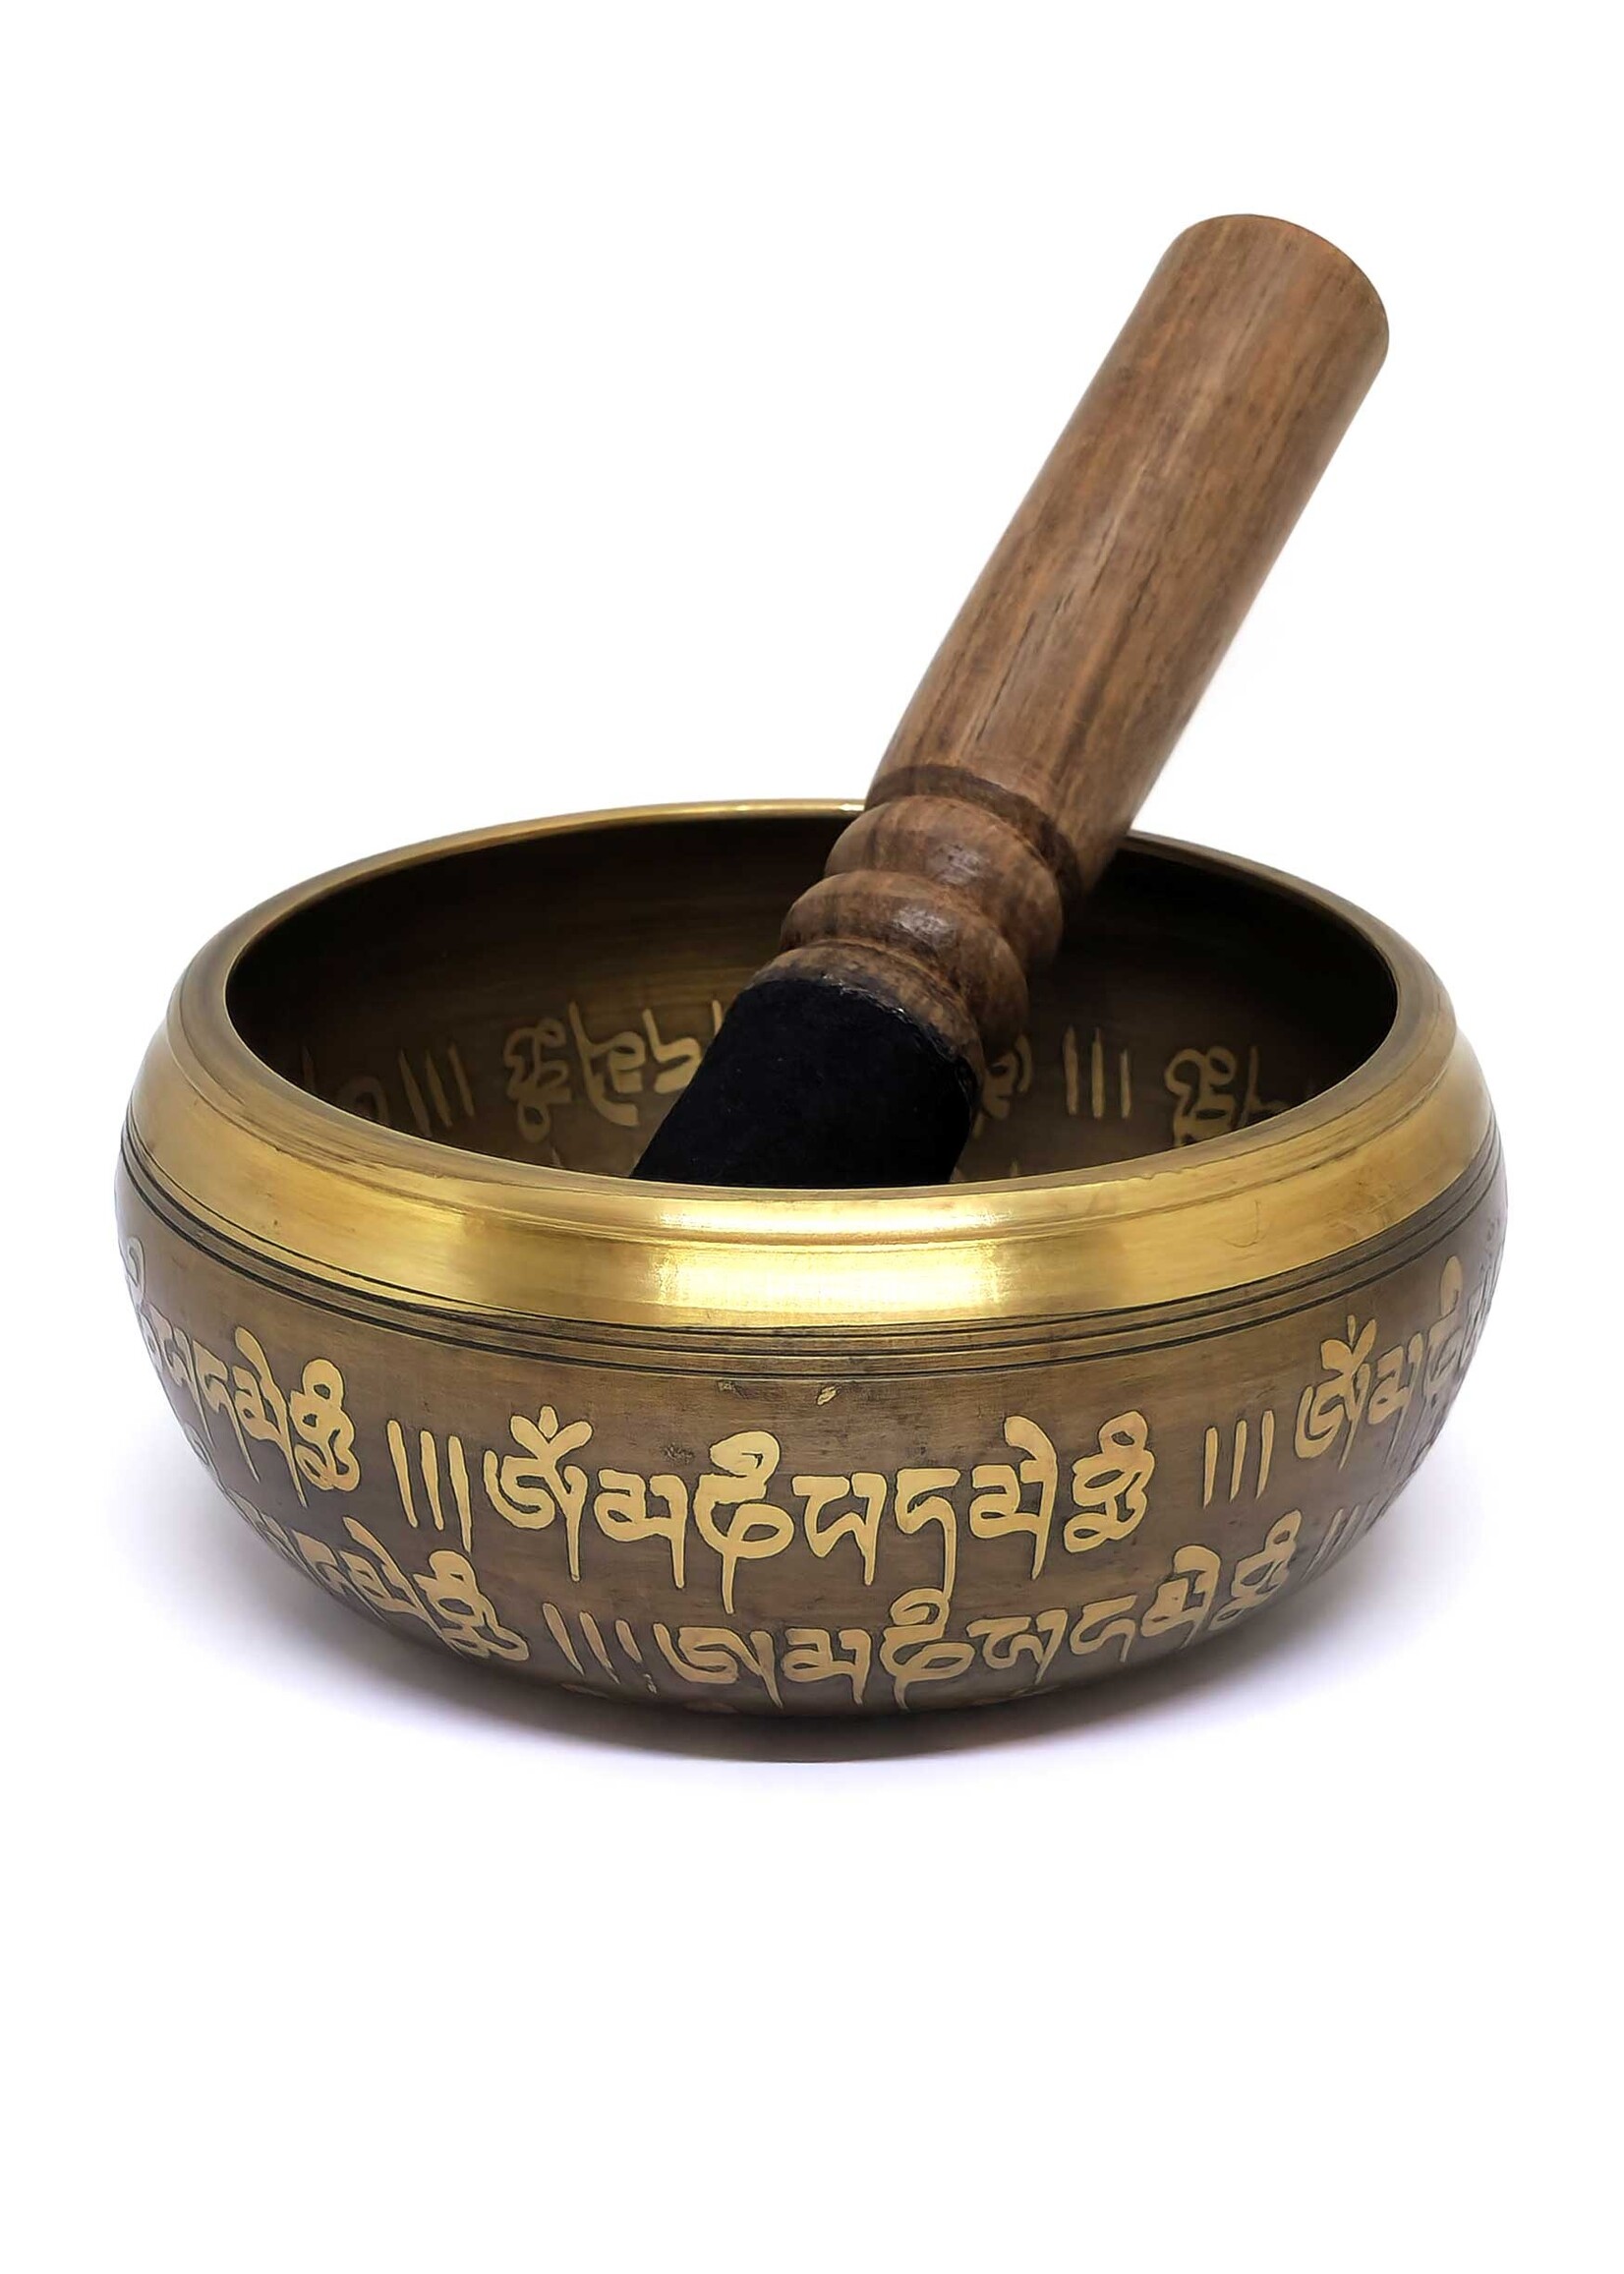 Tibetische Messing-Klangschale "Om Mani Padme Hum" mit Doppeldorje, 2-teiliges Set, Ø 12cm, 490g